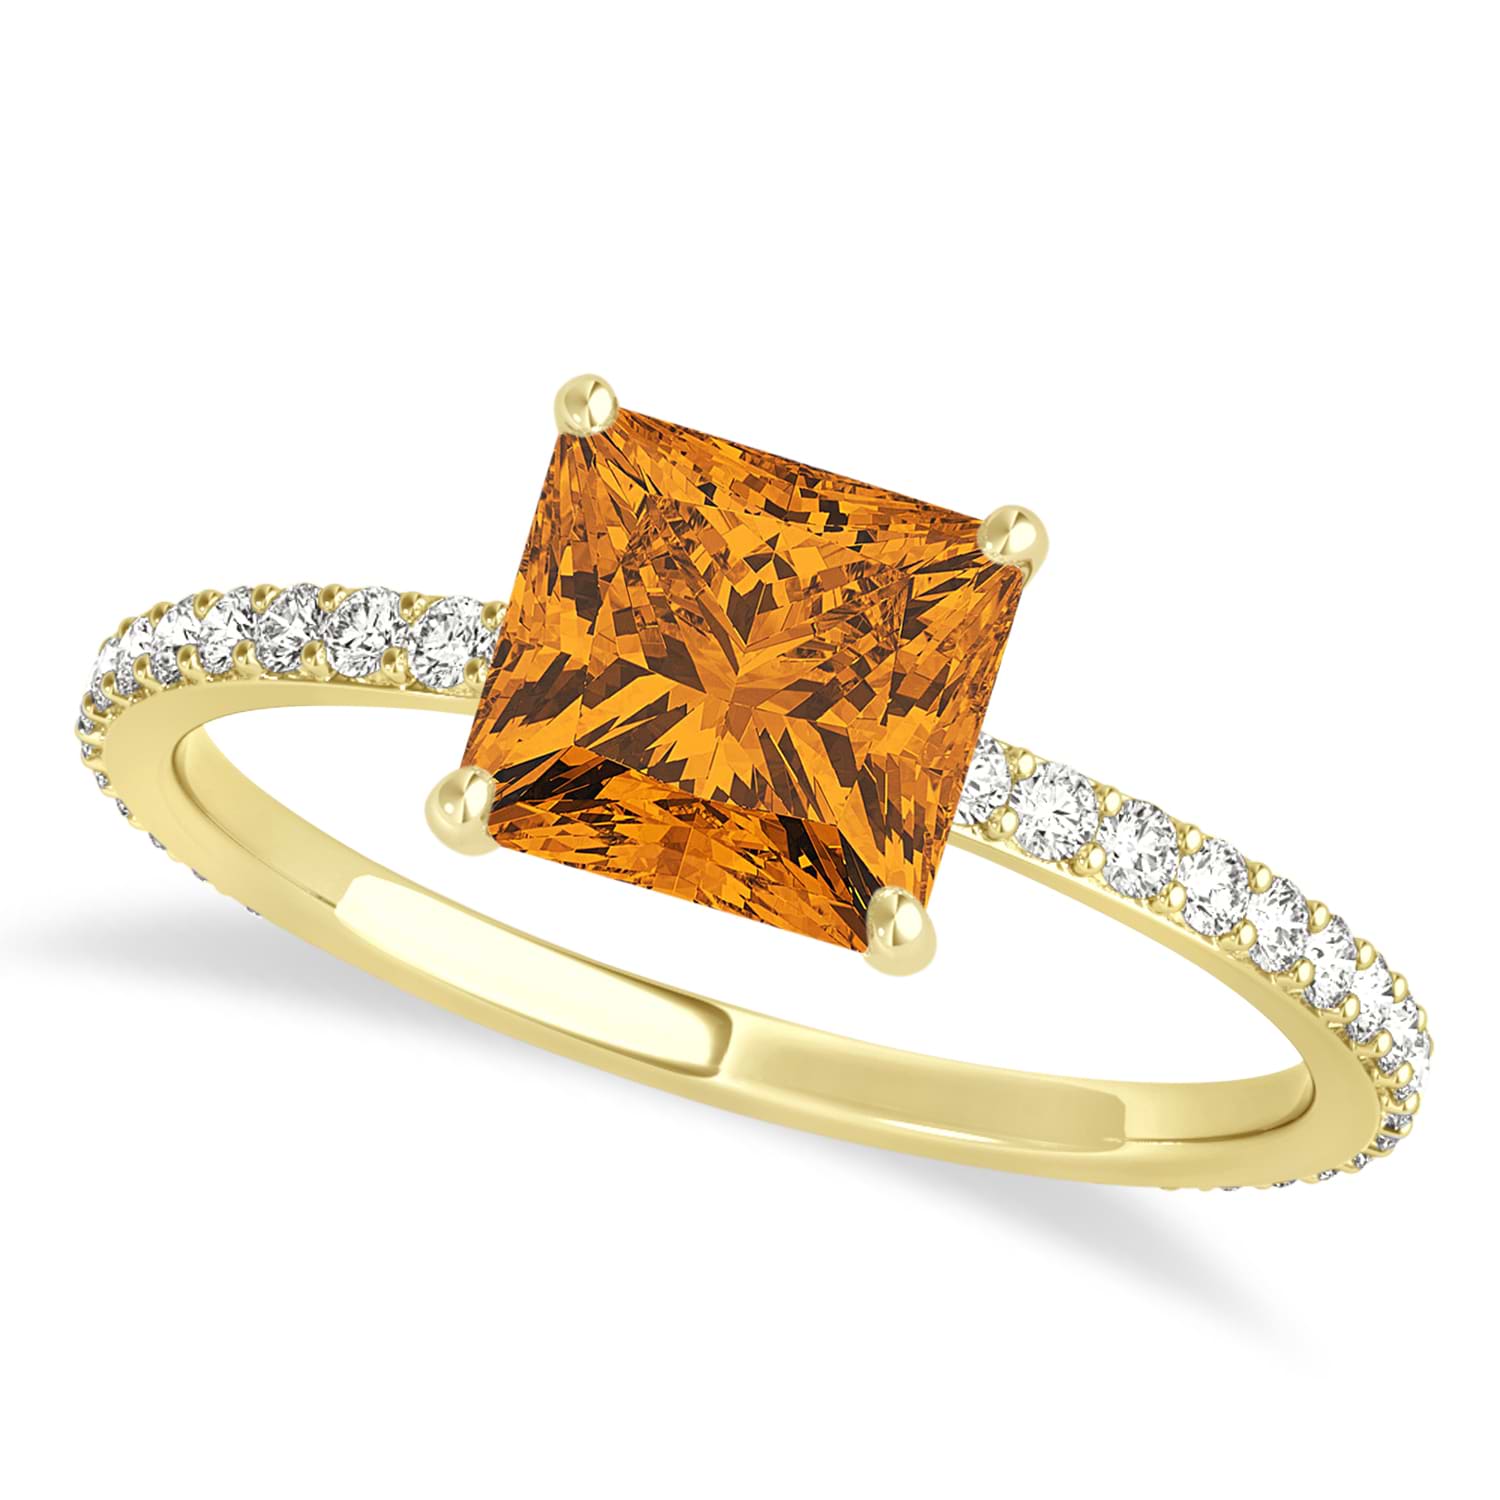 Princess Citrine & Diamond Hidden Halo Engagement Ring 14k Yellow Gold (0.89ct)